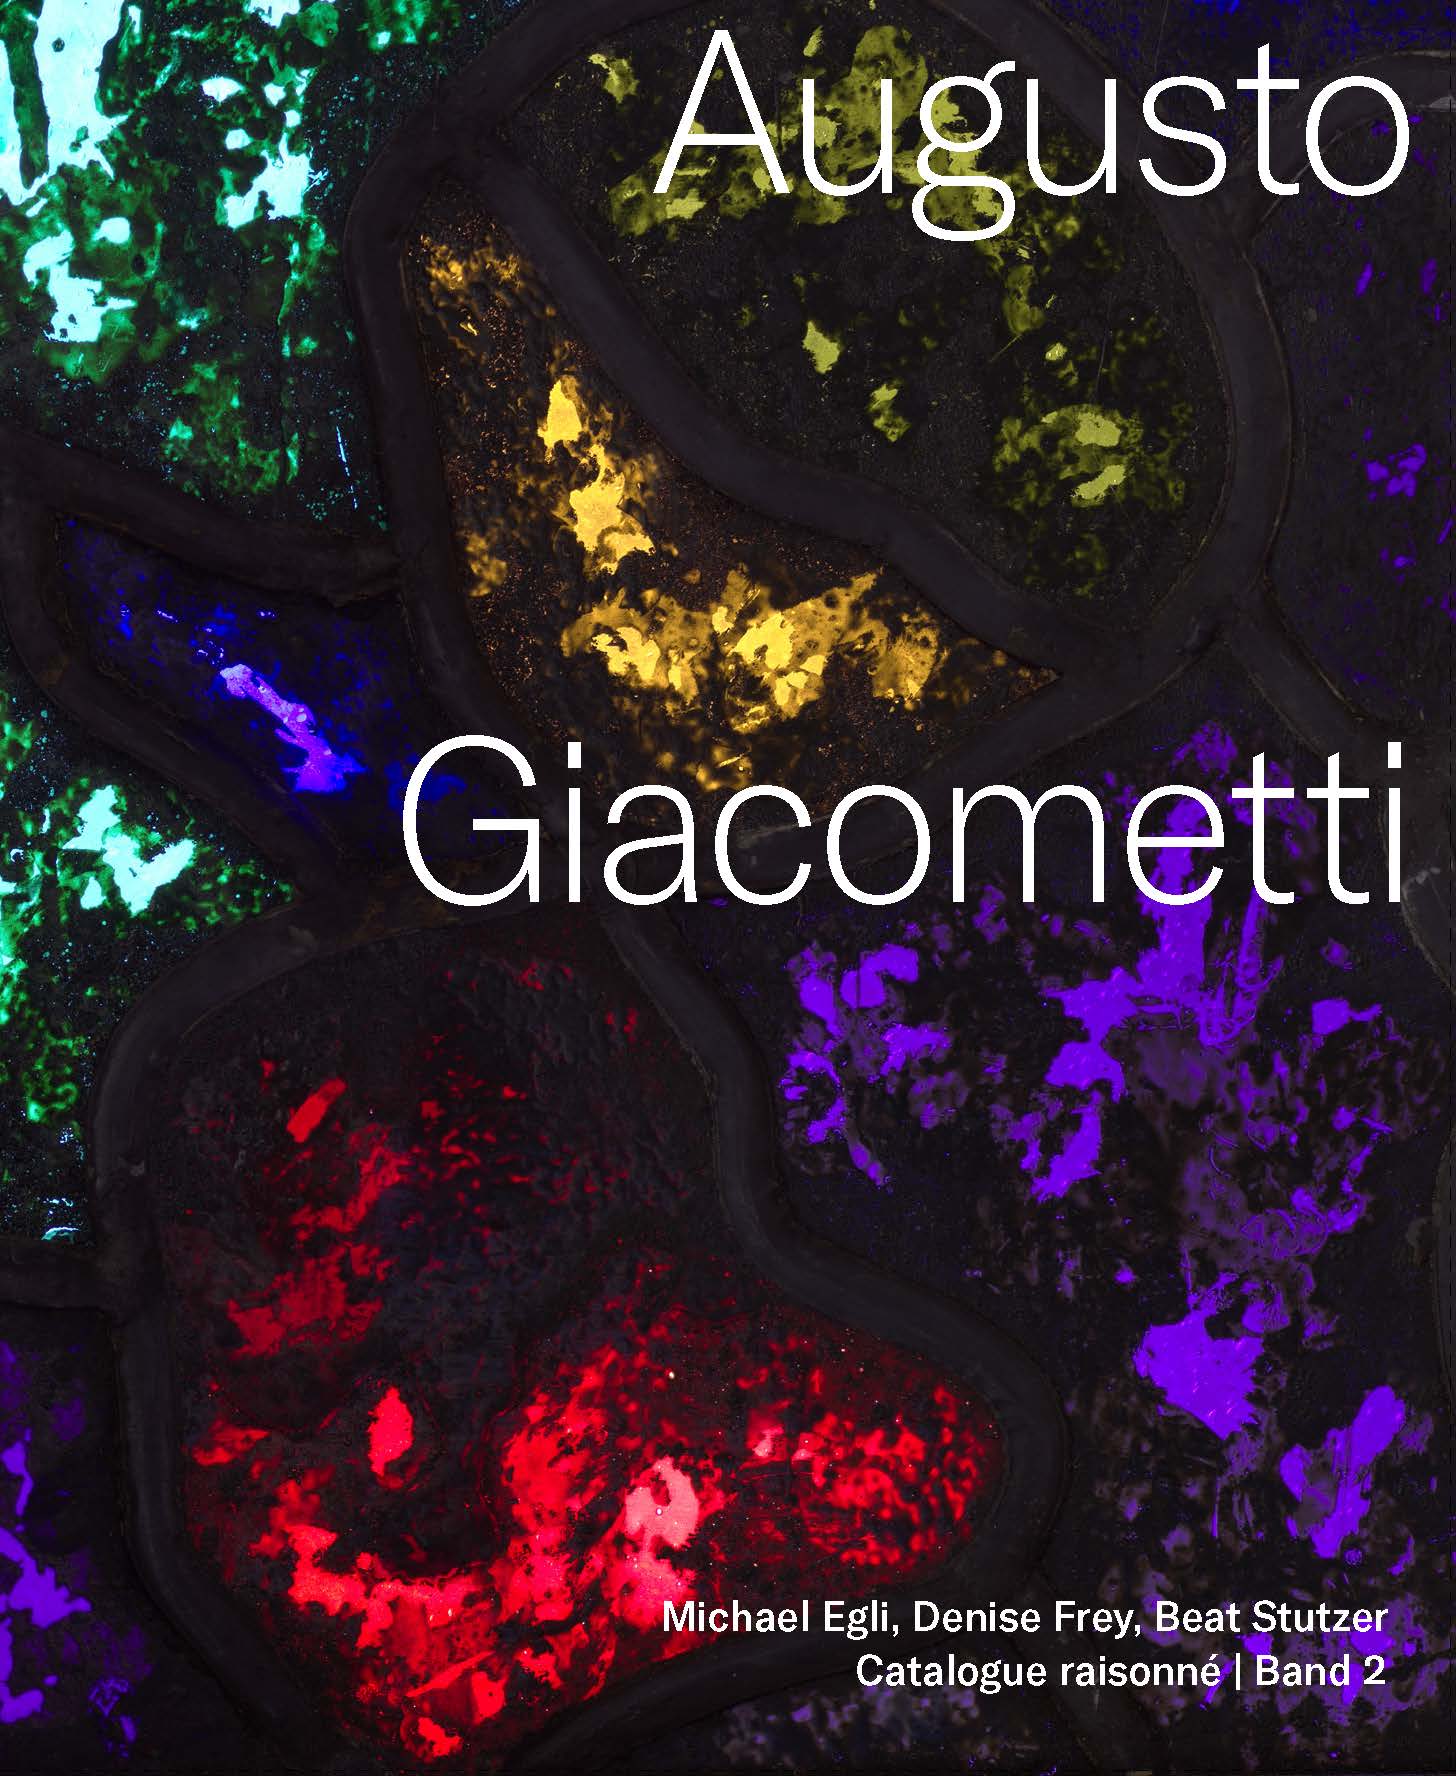 Augusto Giacometti. Catalogue raisonné. Gemälde, Wandgemälde, Mosaike und Glasgemälde 20230690